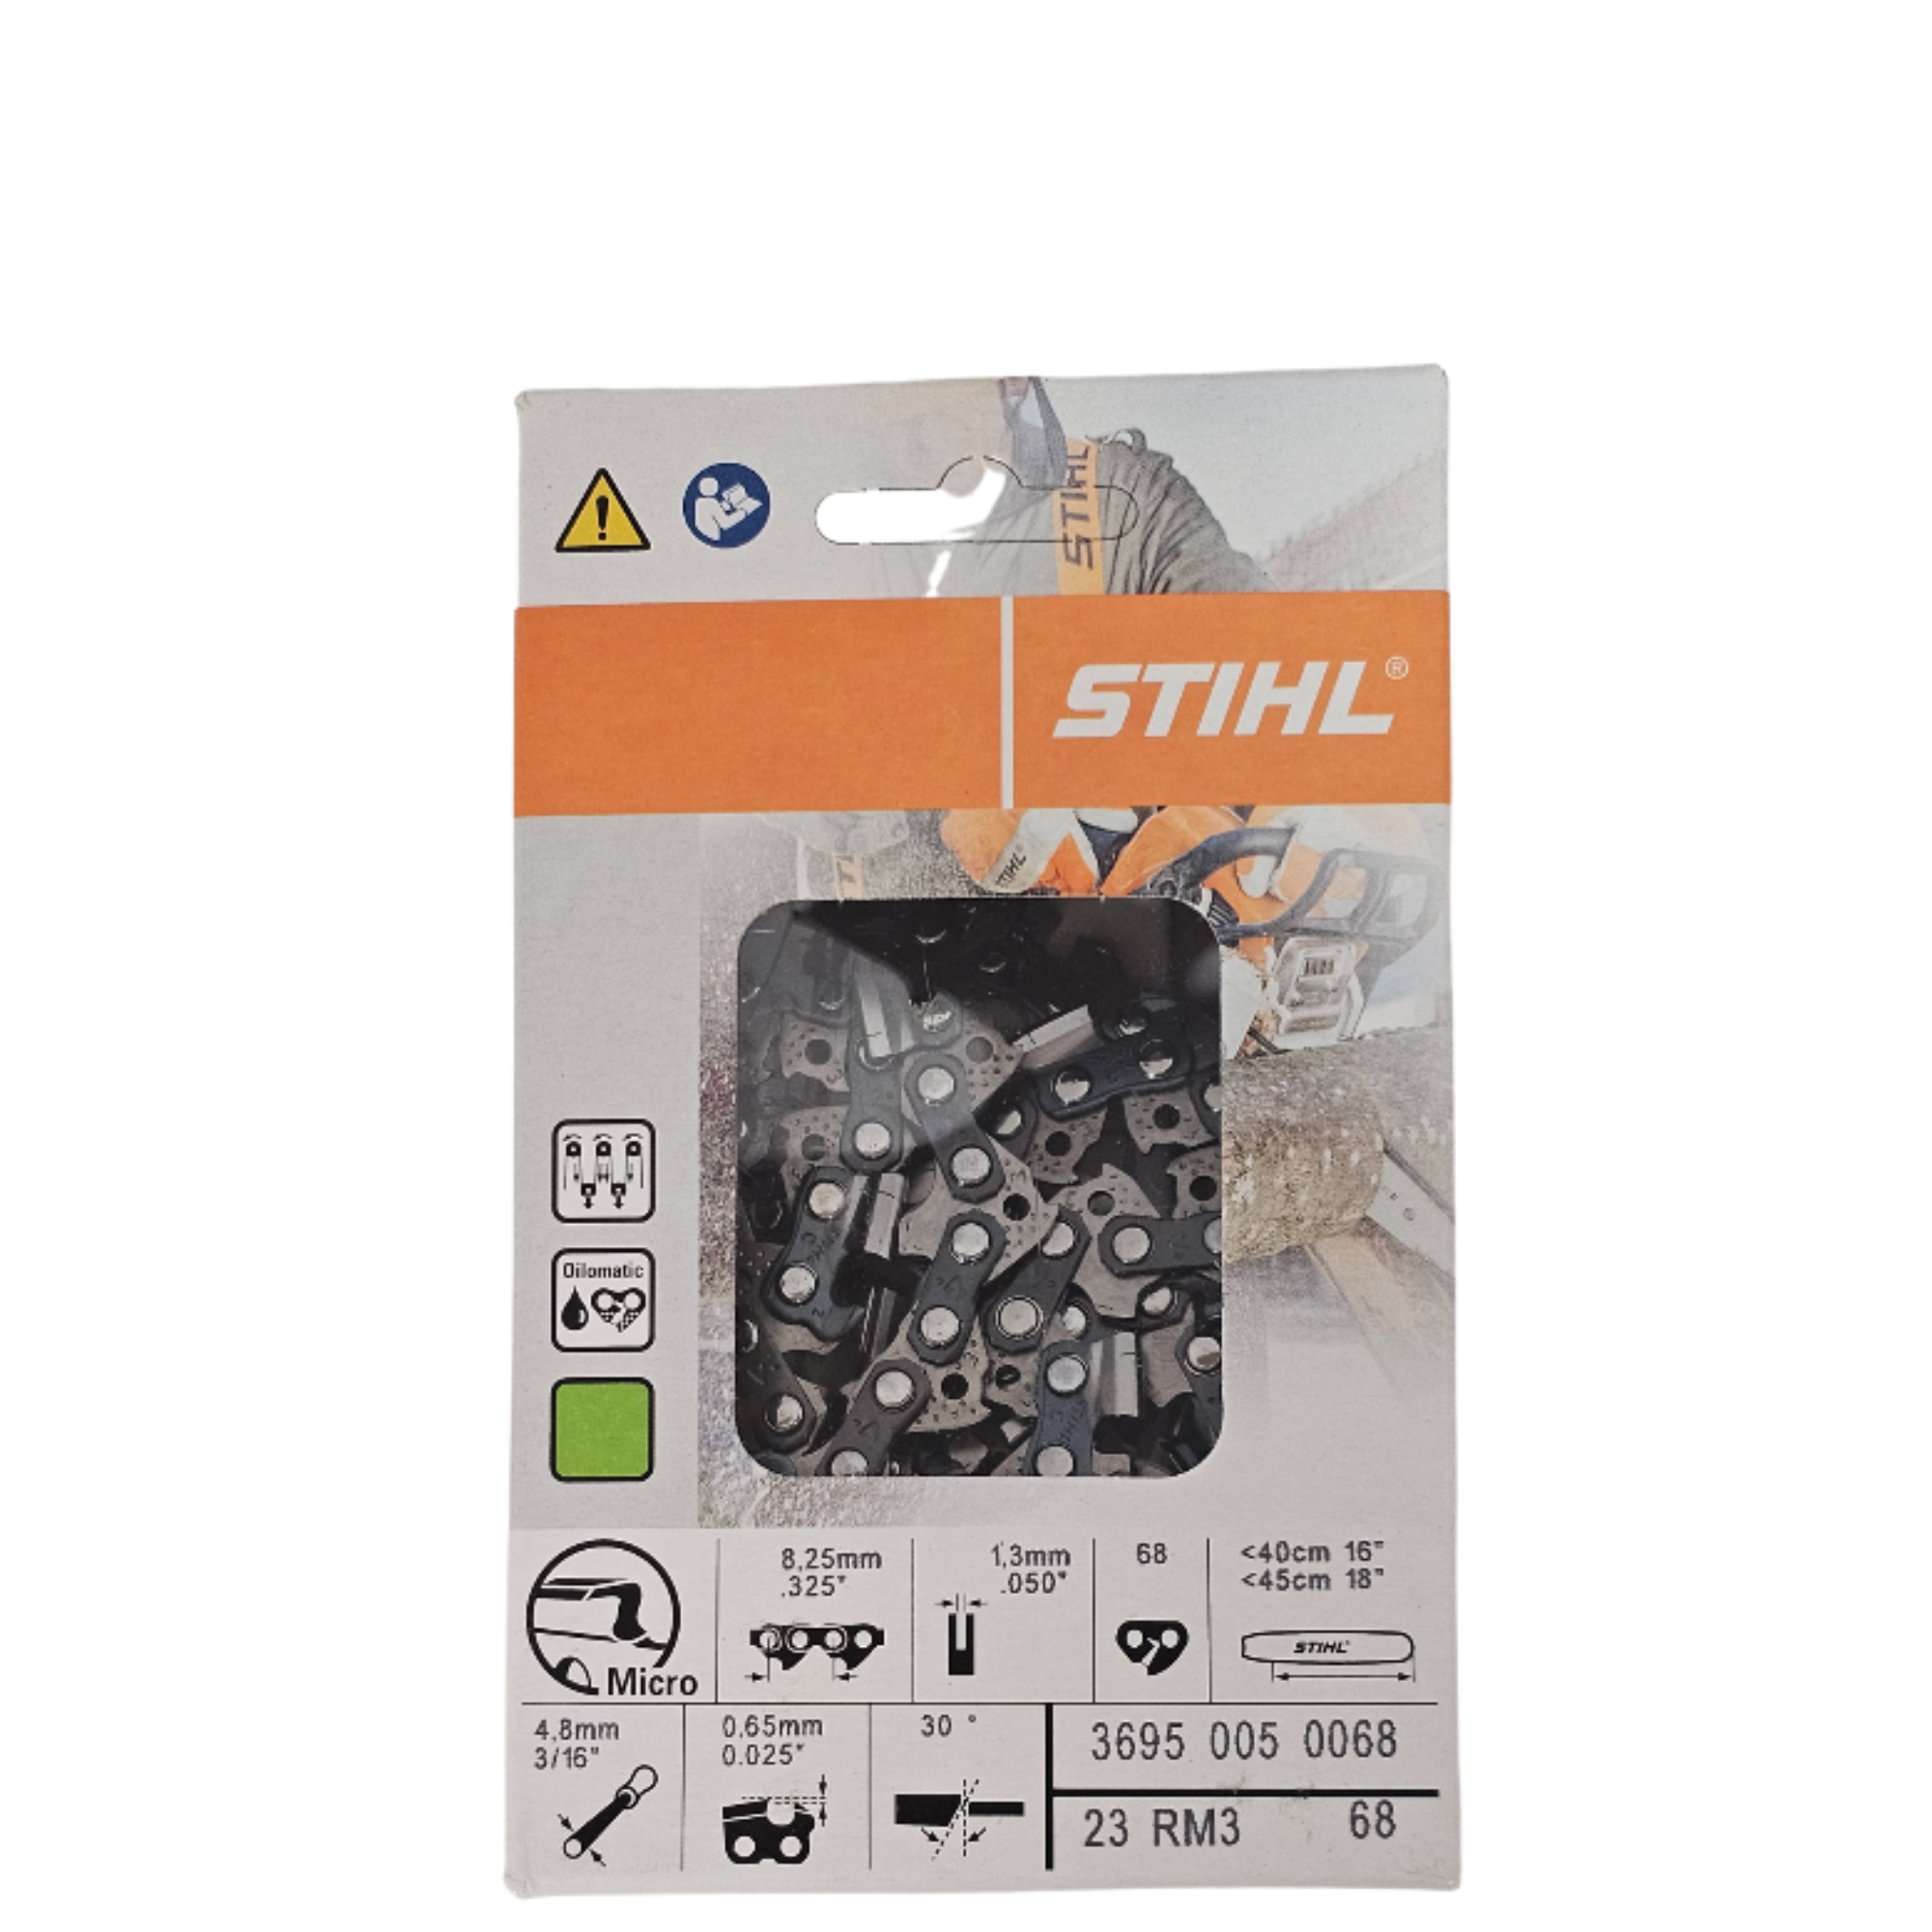 BULK || STIHL Oilomatic Rapid Micro 3 | 23 RM3 68 | 16 - 18 in. | 68 Drive Links | Chainsaw Chain | 3695 005 0068